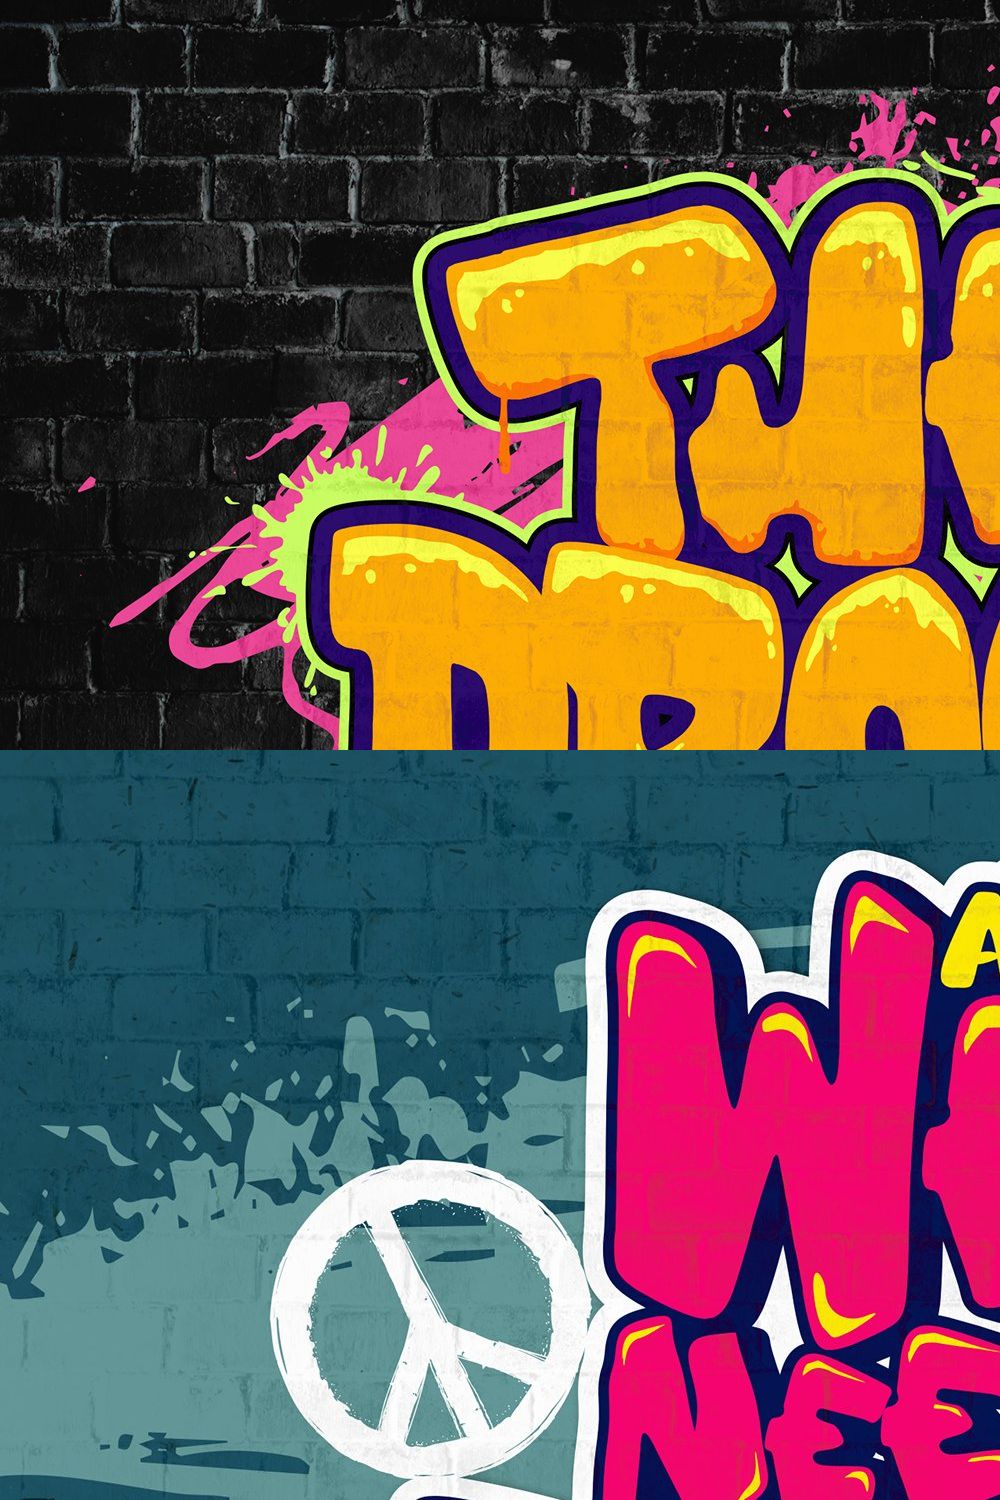 The Droga - Thick Graffiti Font pinterest preview image.